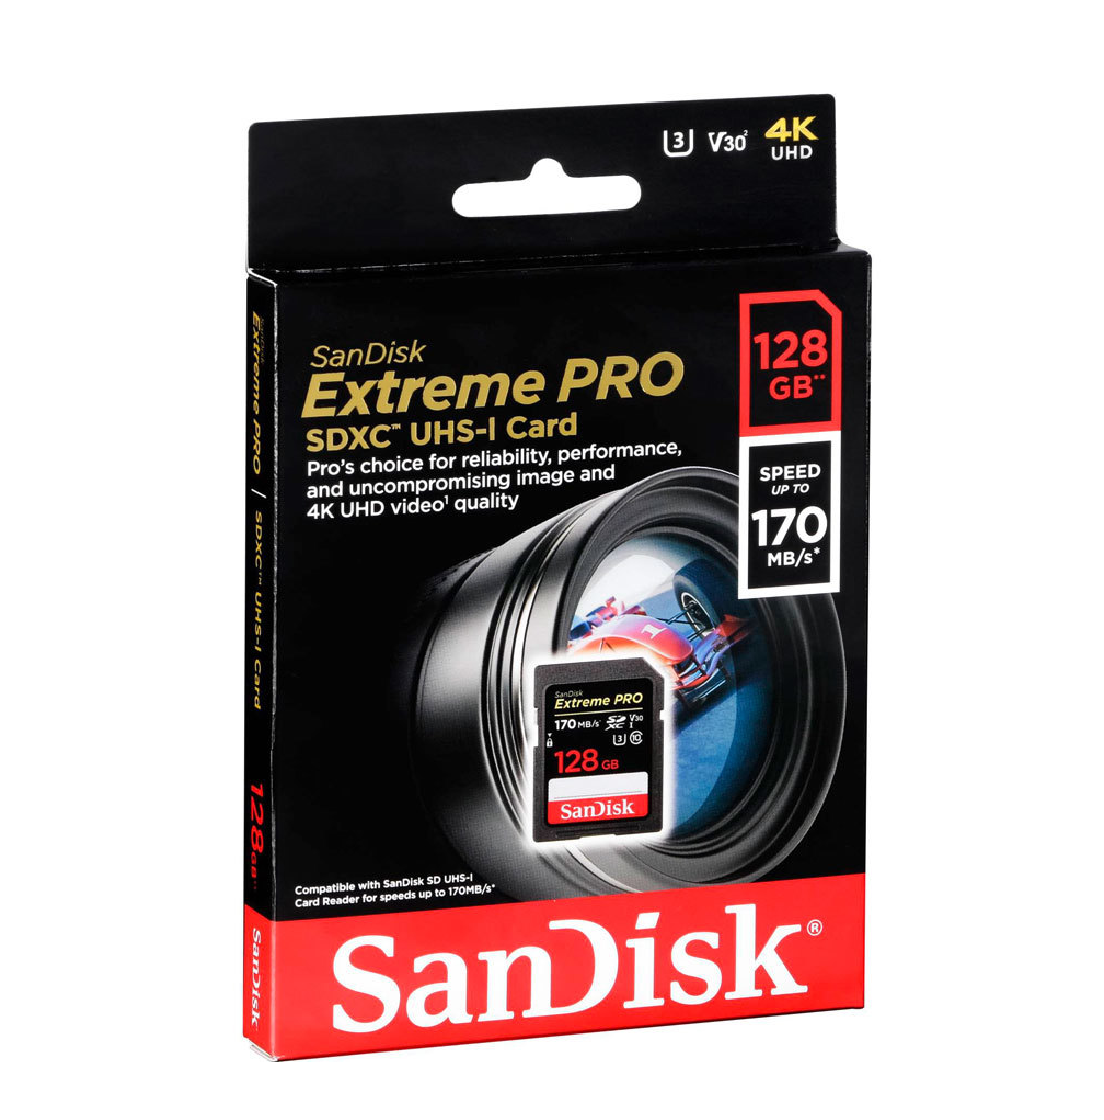 Sandisk Extreme Pro Sdxc 170mb S Uhsi Card 128gb